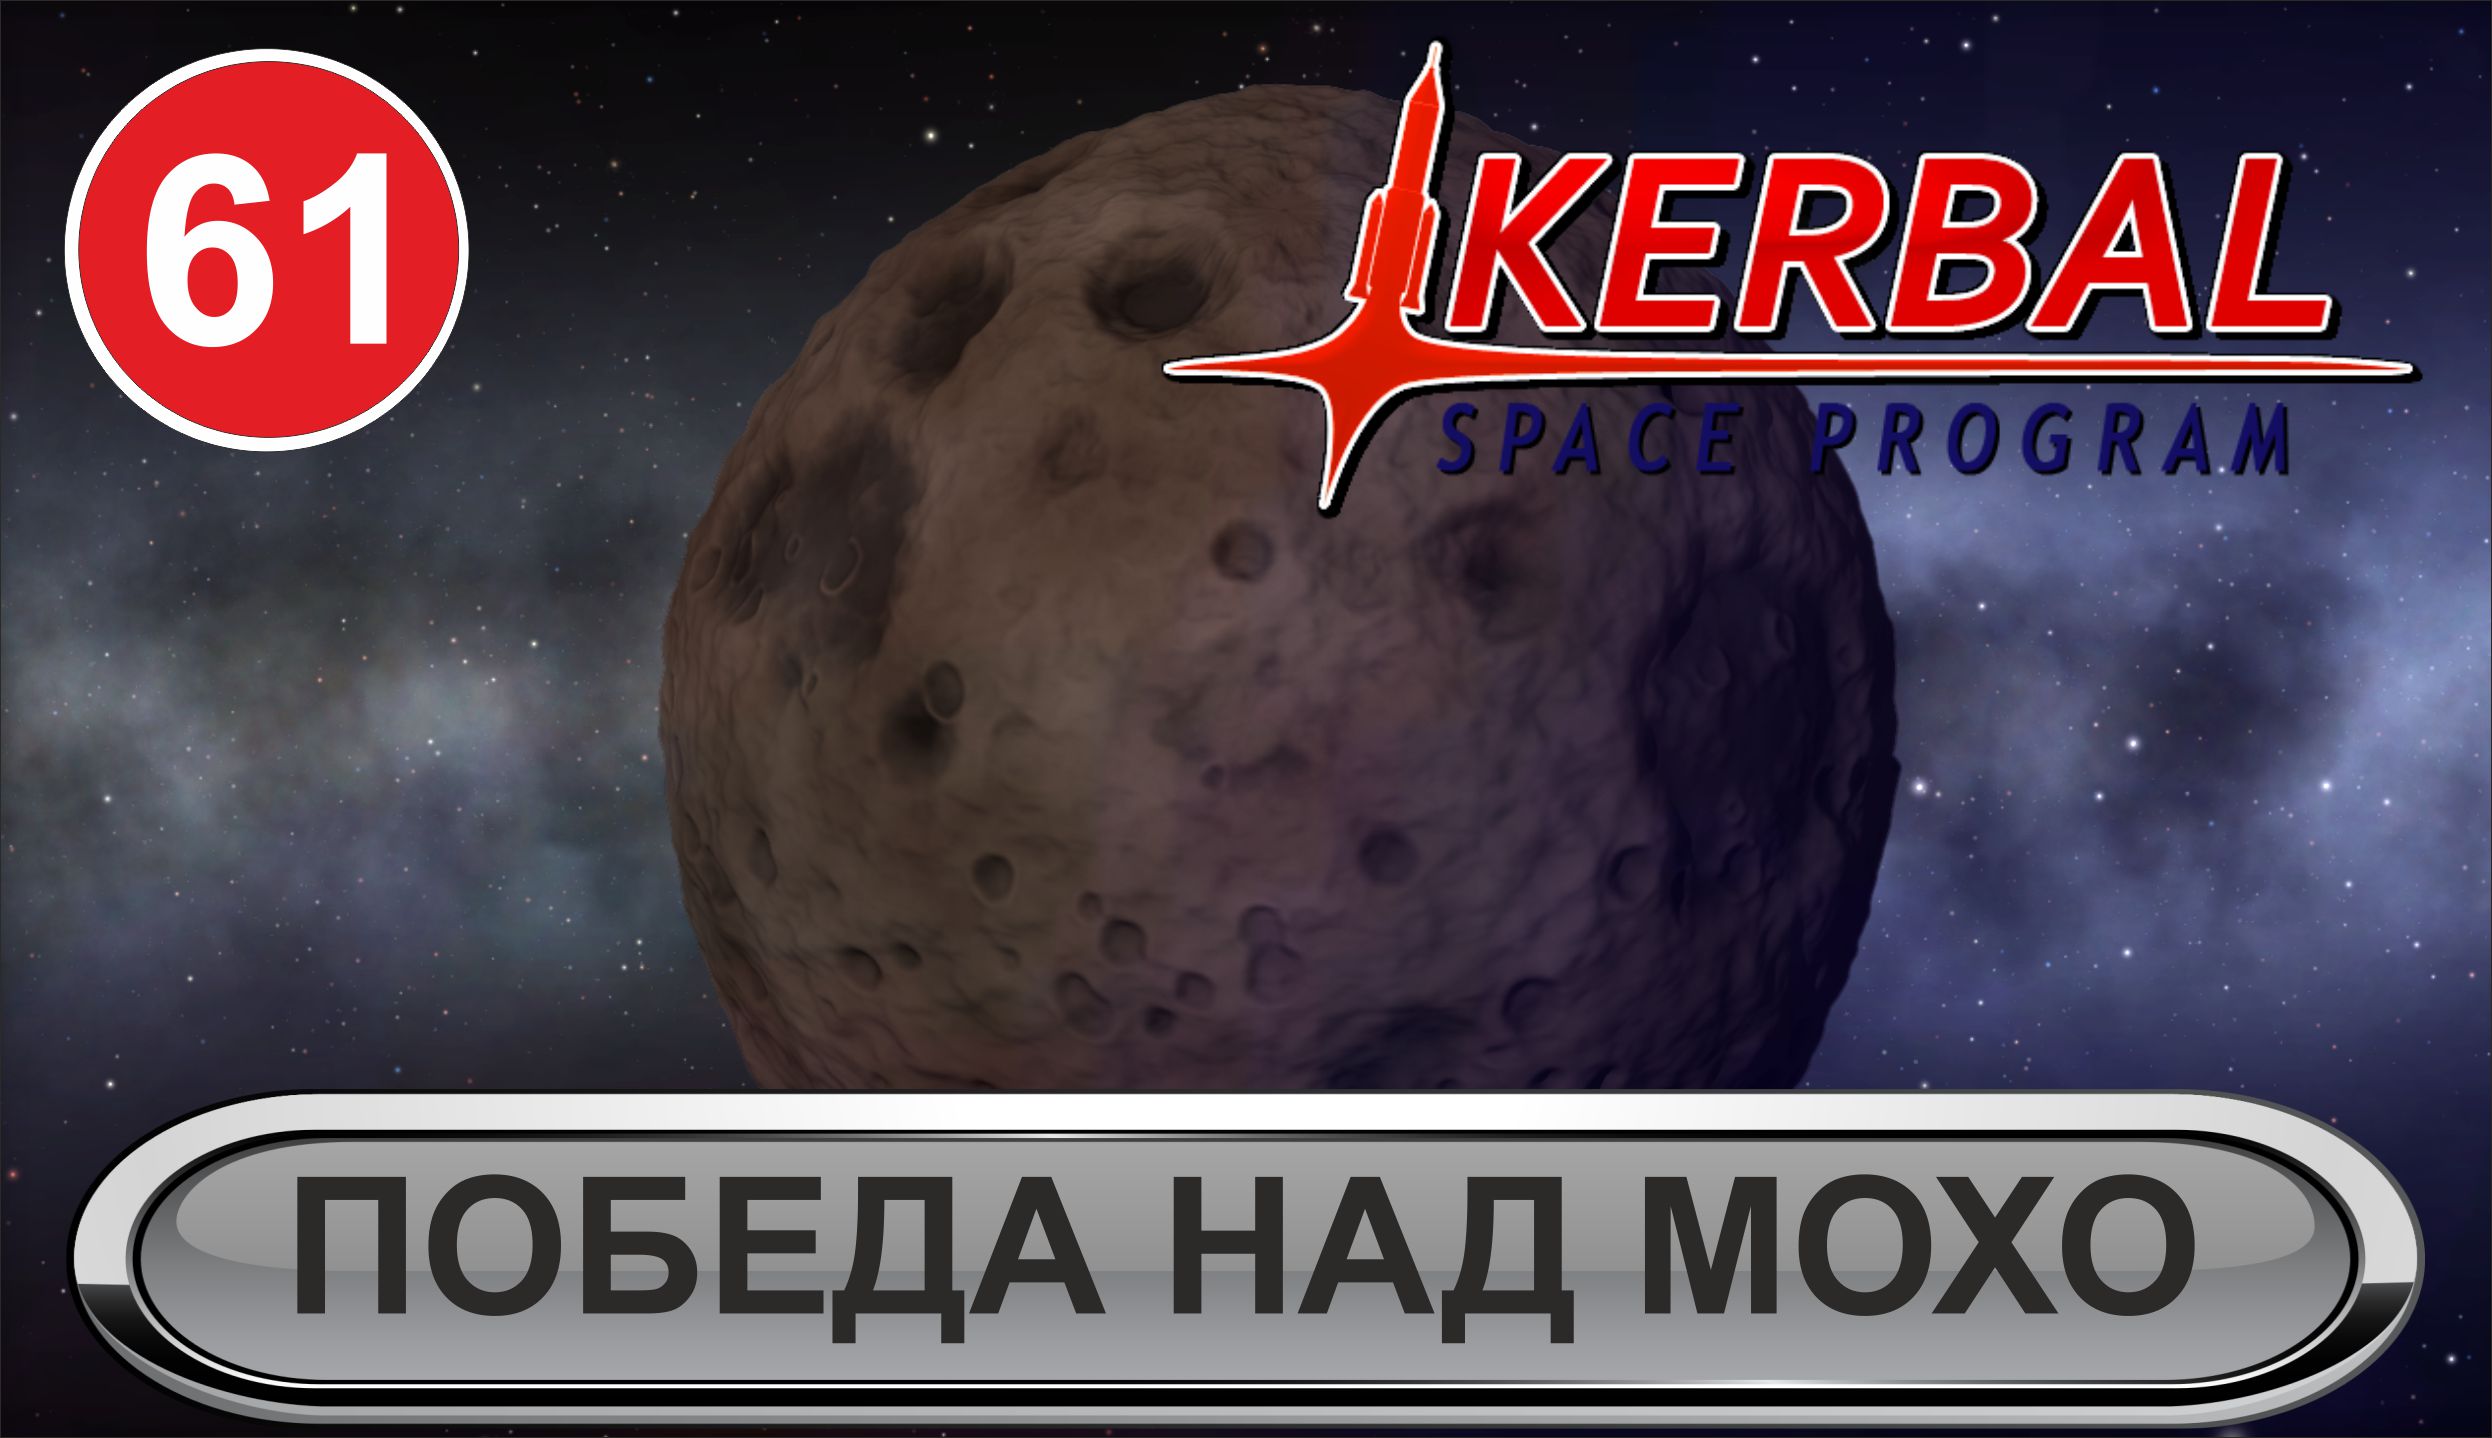 Kerbal Space Program - Победа над Мохо